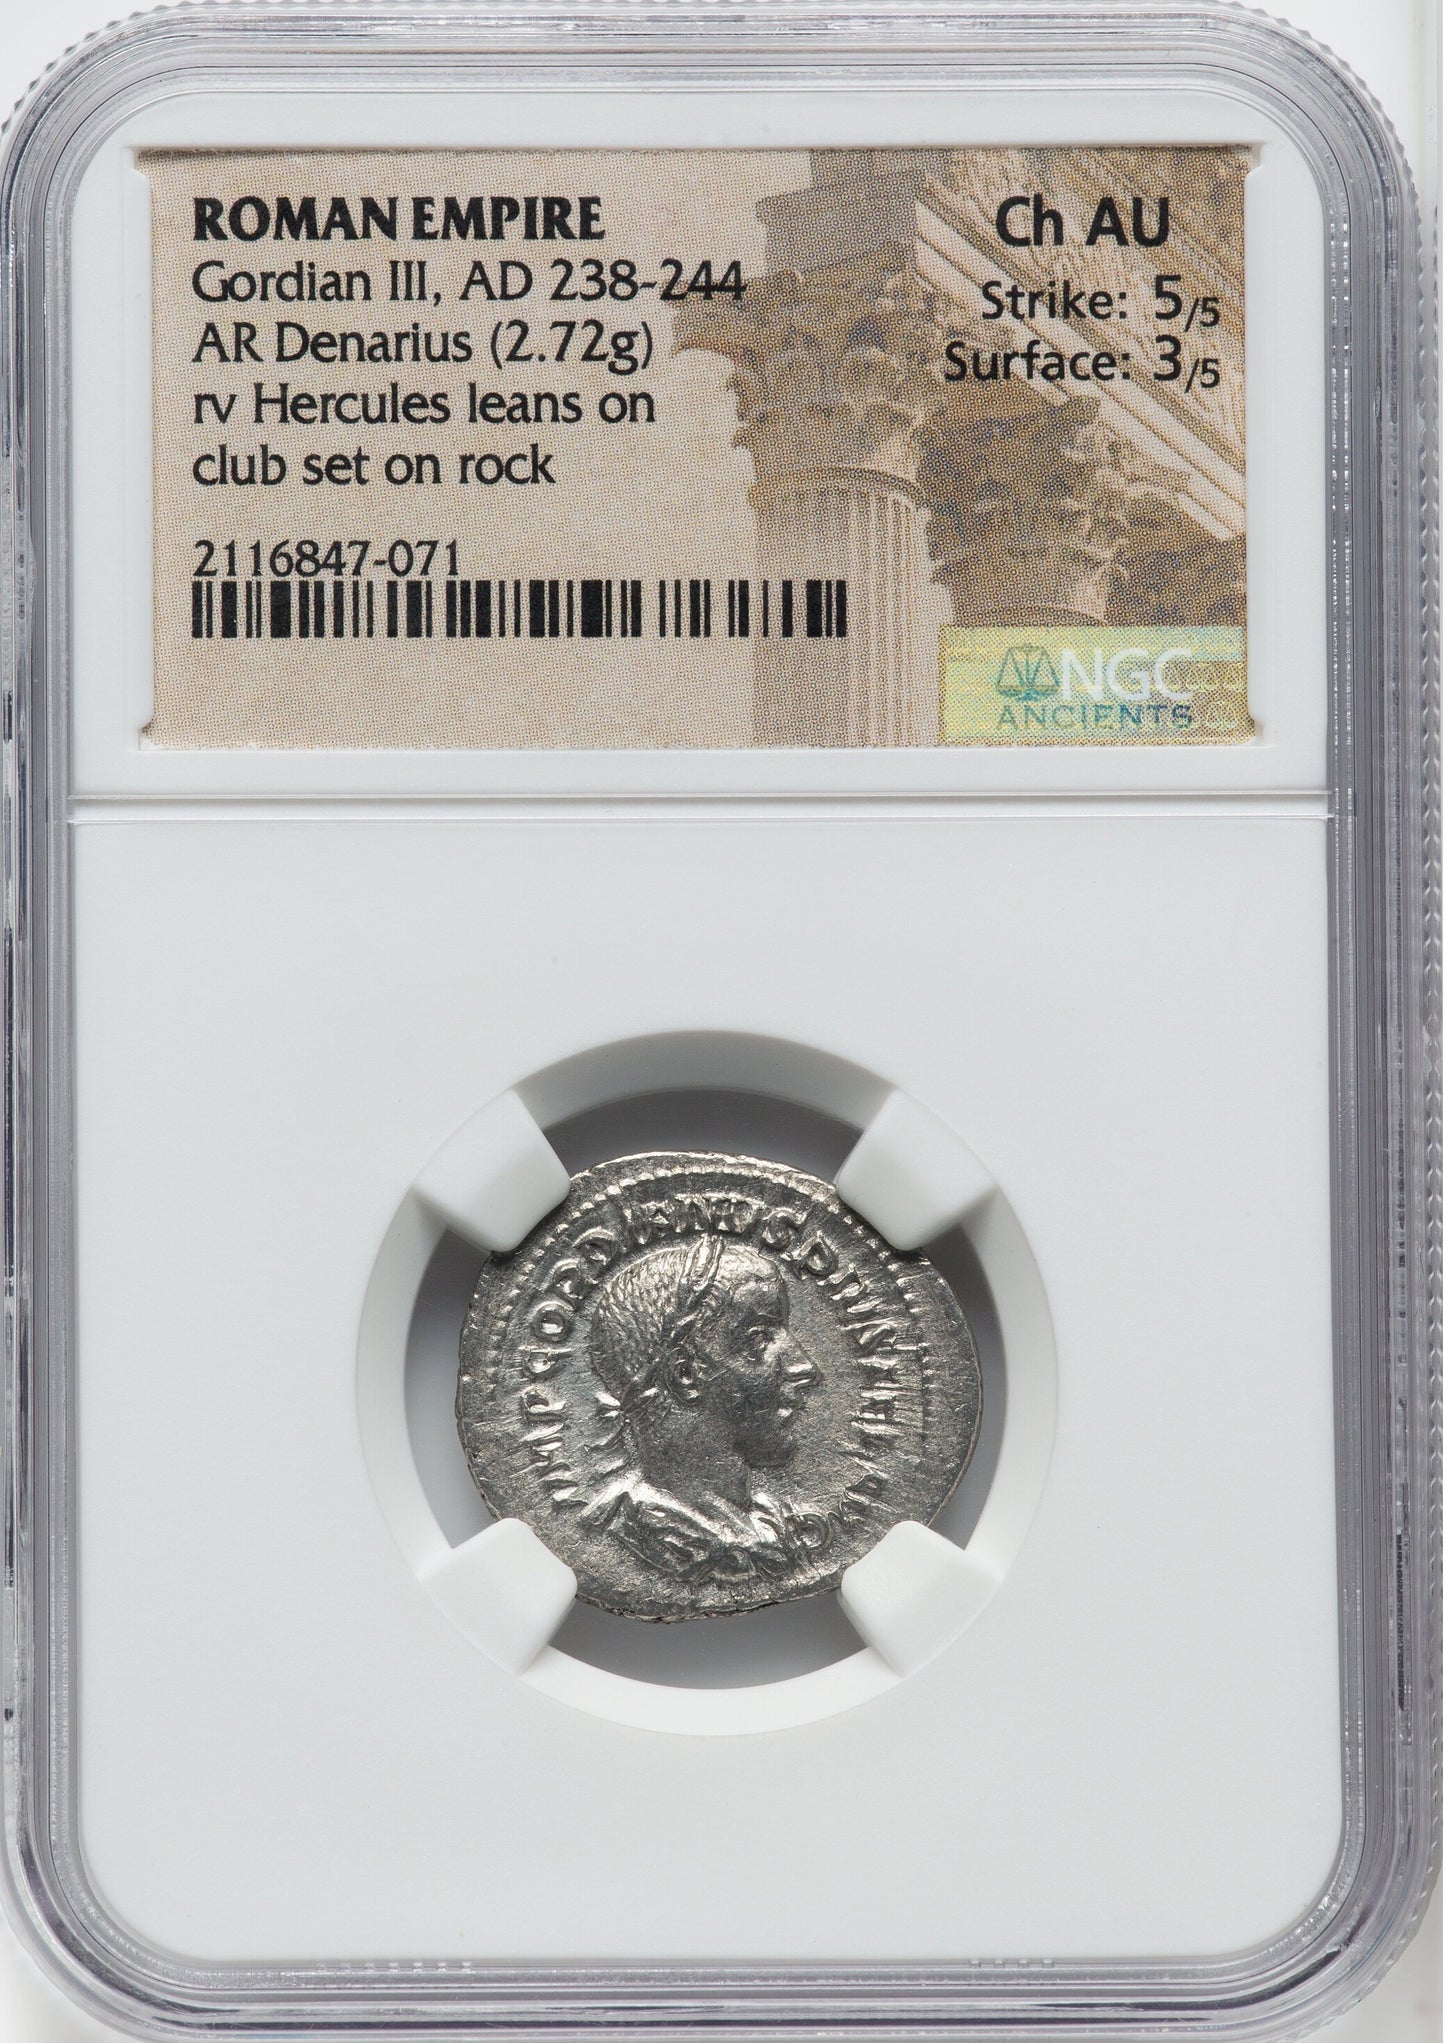 Roman Empire - Gordian III - Silver Denarius - NGC Ch AU - RIC:116